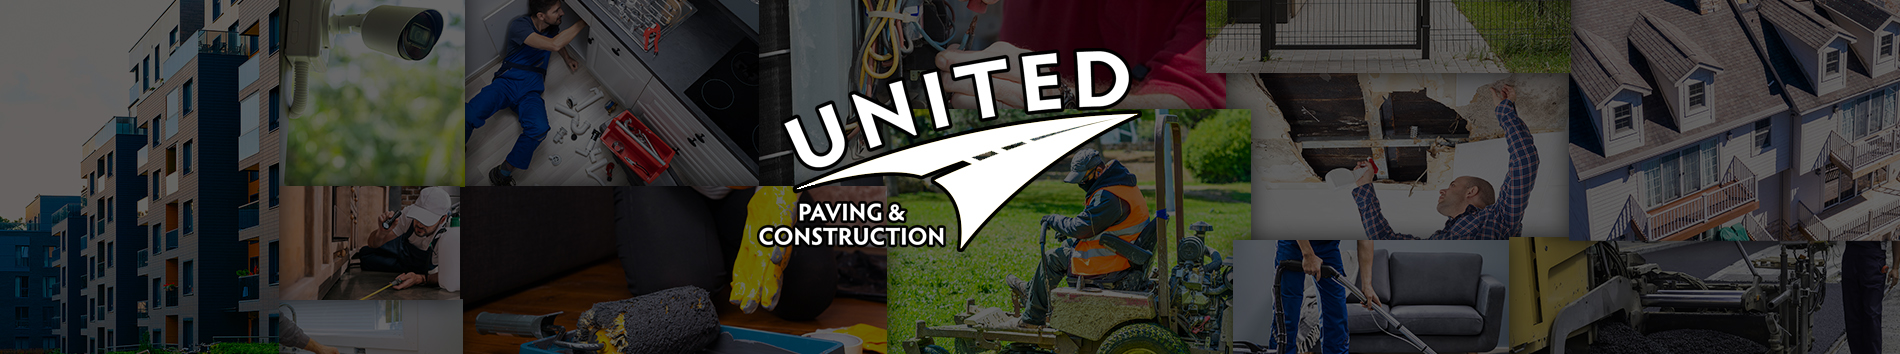 United Paving & Construction LLC